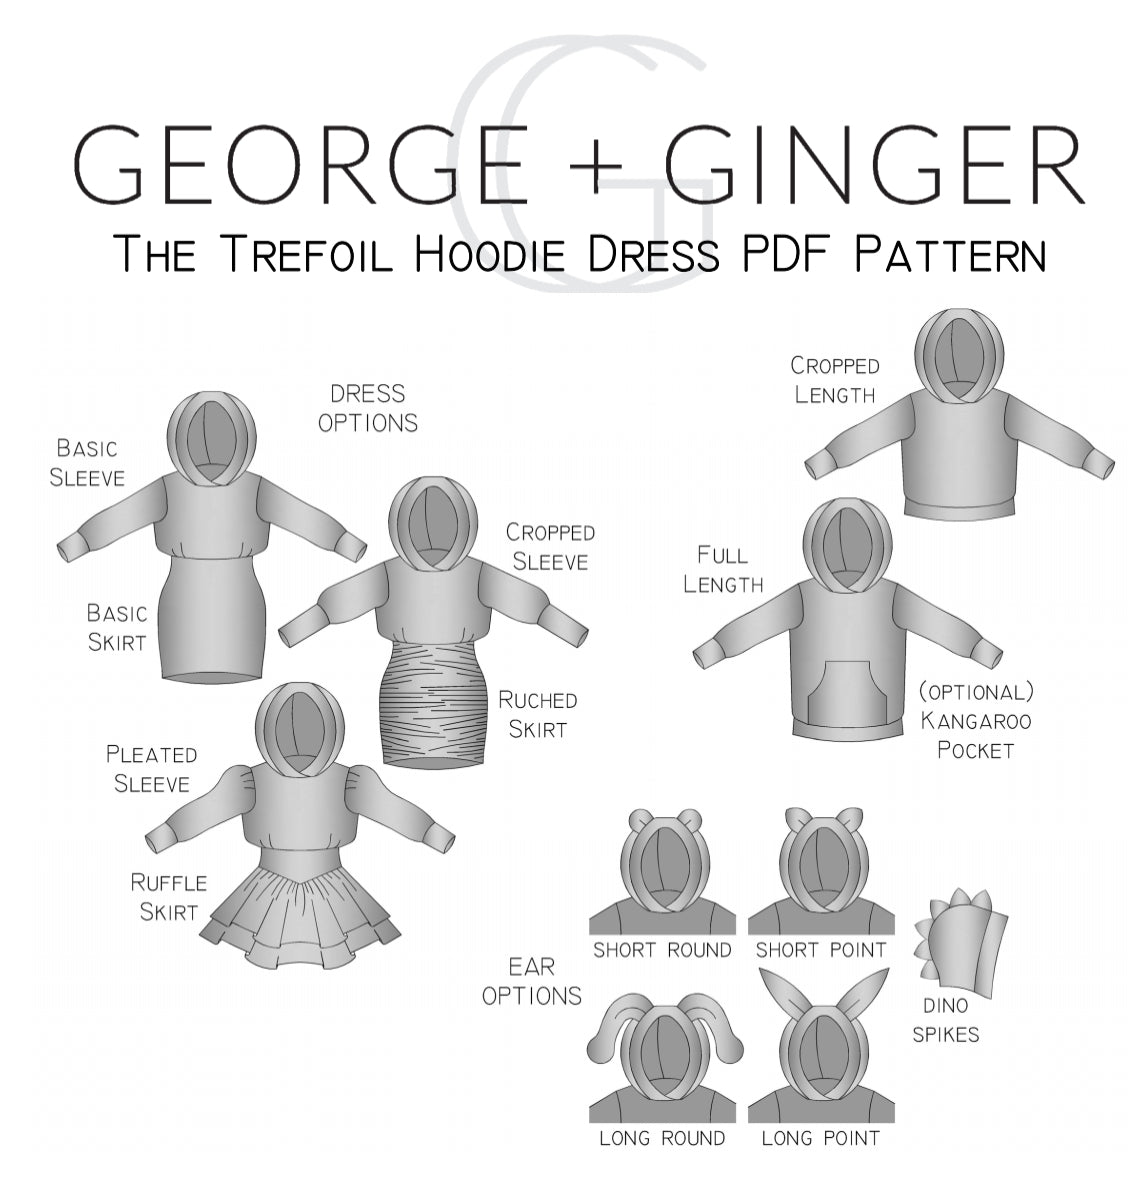 The Trefoil Hoodie Dress PDF Sewing Pattern